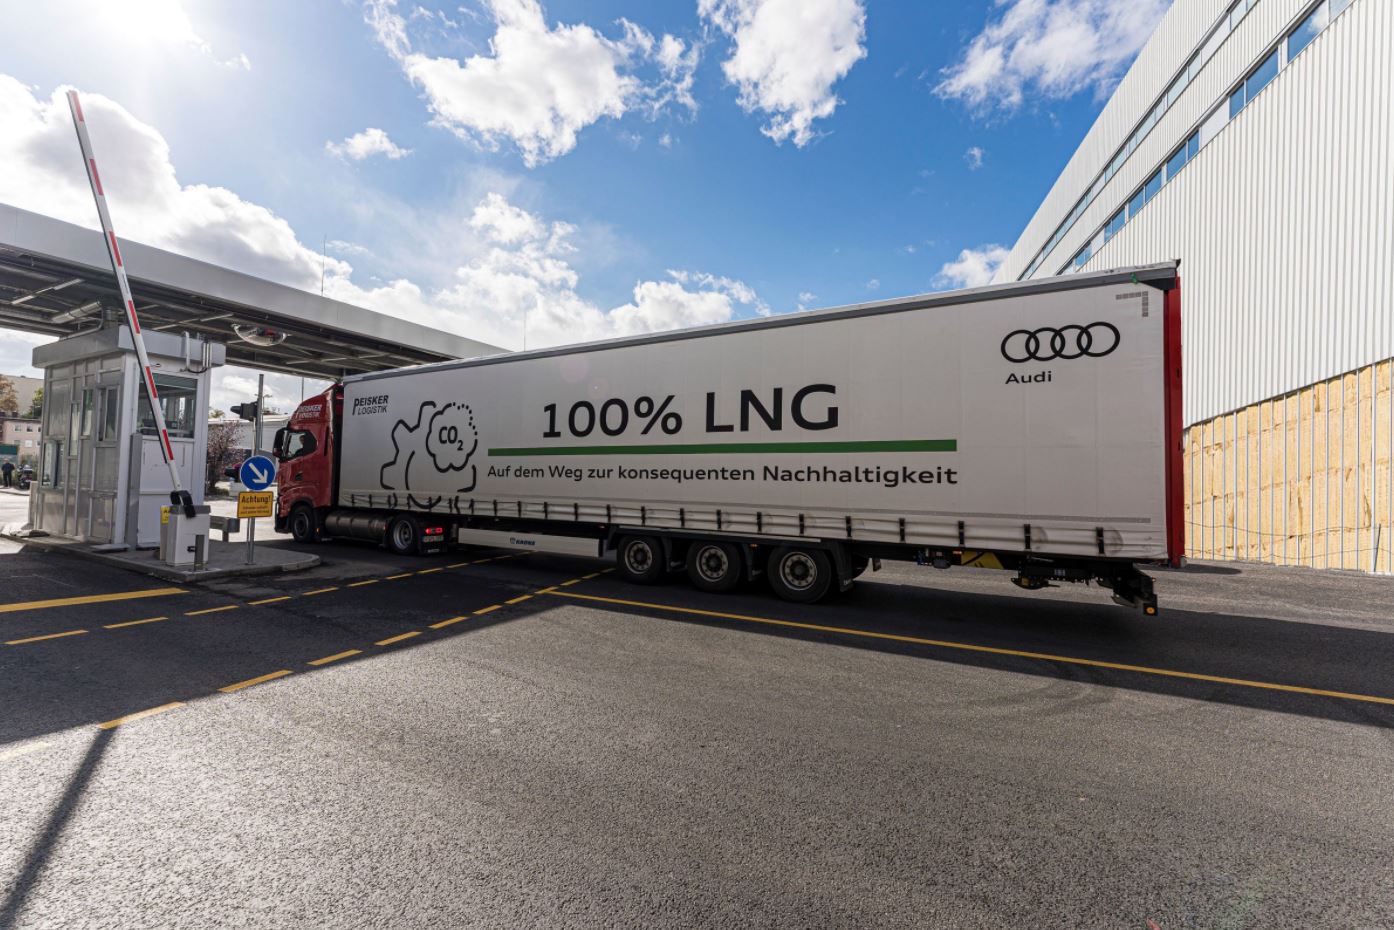 Audi using LNG-powered trucks